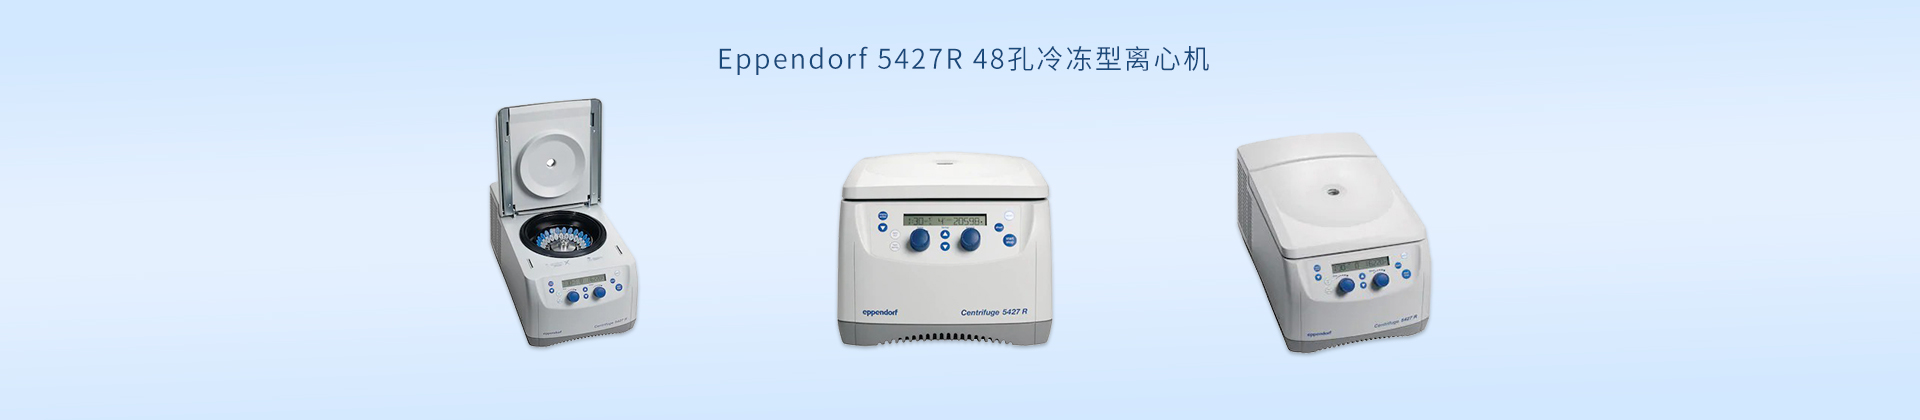 Eppendorf 5427R 48孔冷冻型离心机